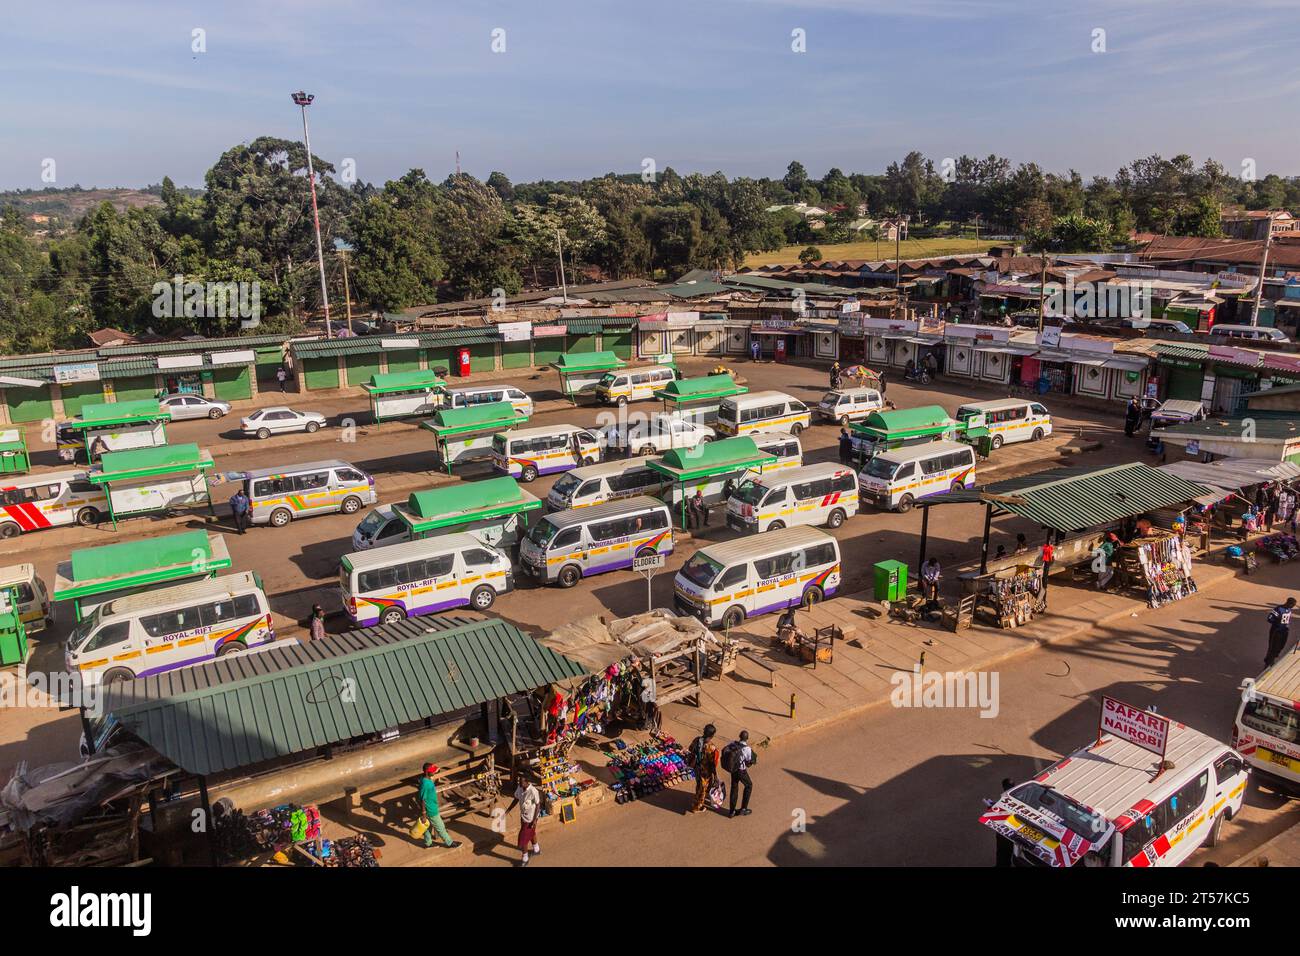 KAKAMEGA, KENYA - FEBRUARY 23, 2020: Aerial view of matatu (minibus) stand in Kakamega, Kenya Stock Photo